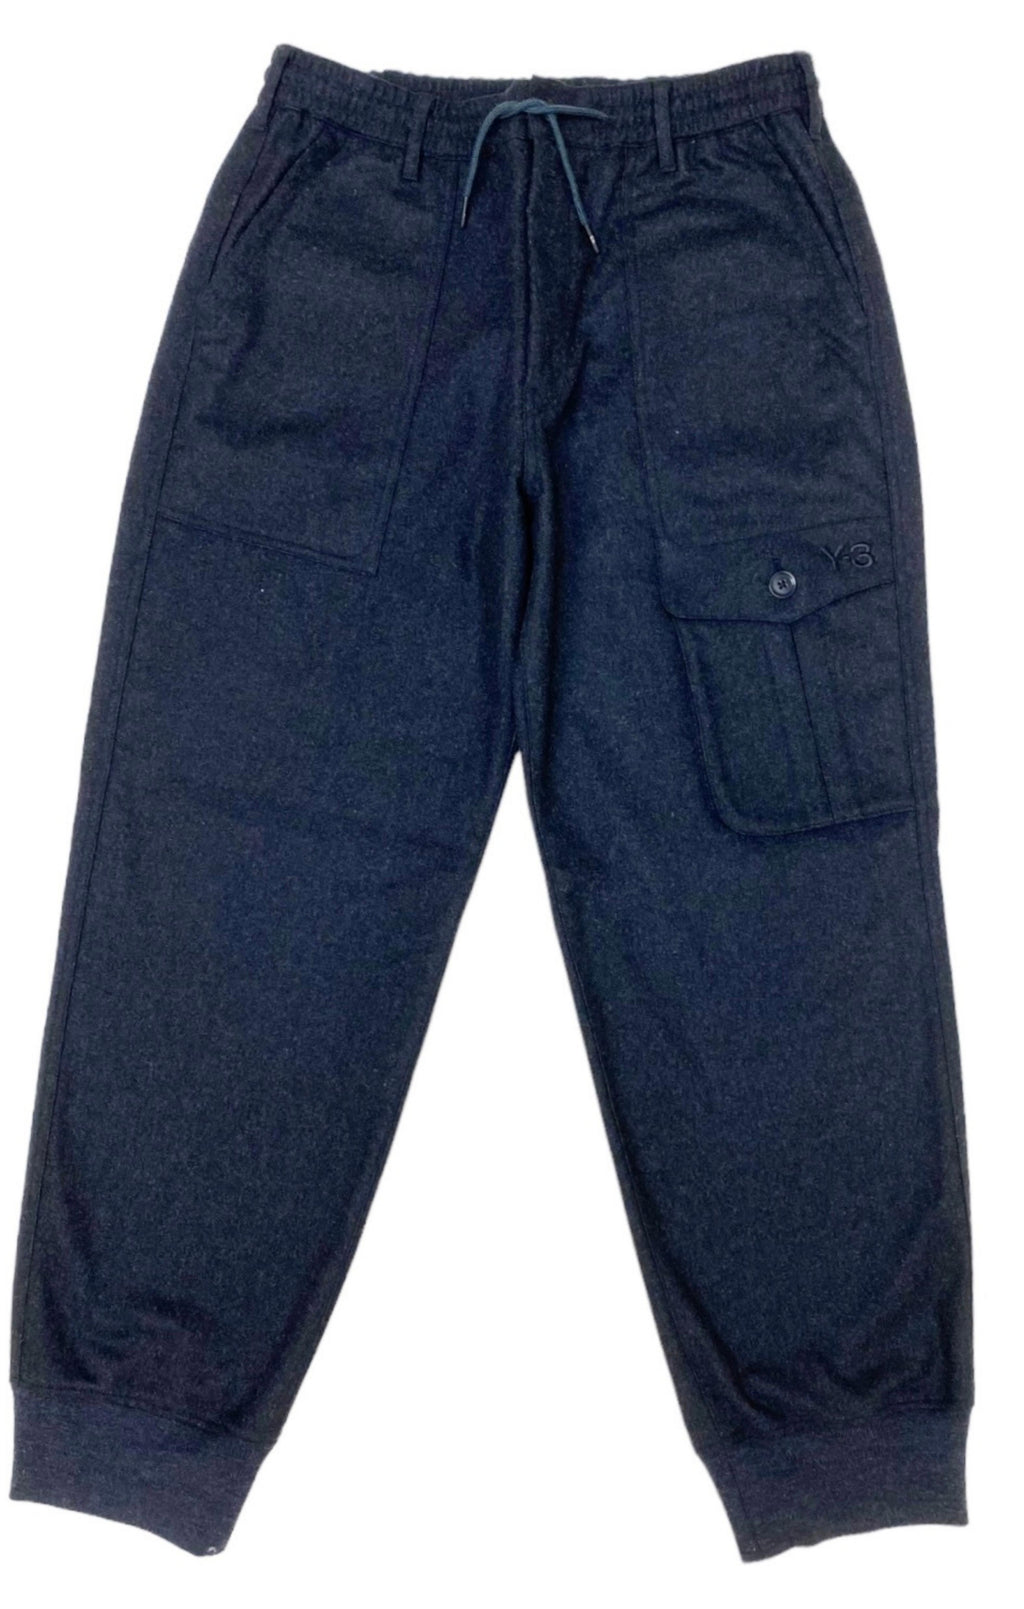 Y-3 YOHJI YAMAMOTO (RARE) Pants Size: L